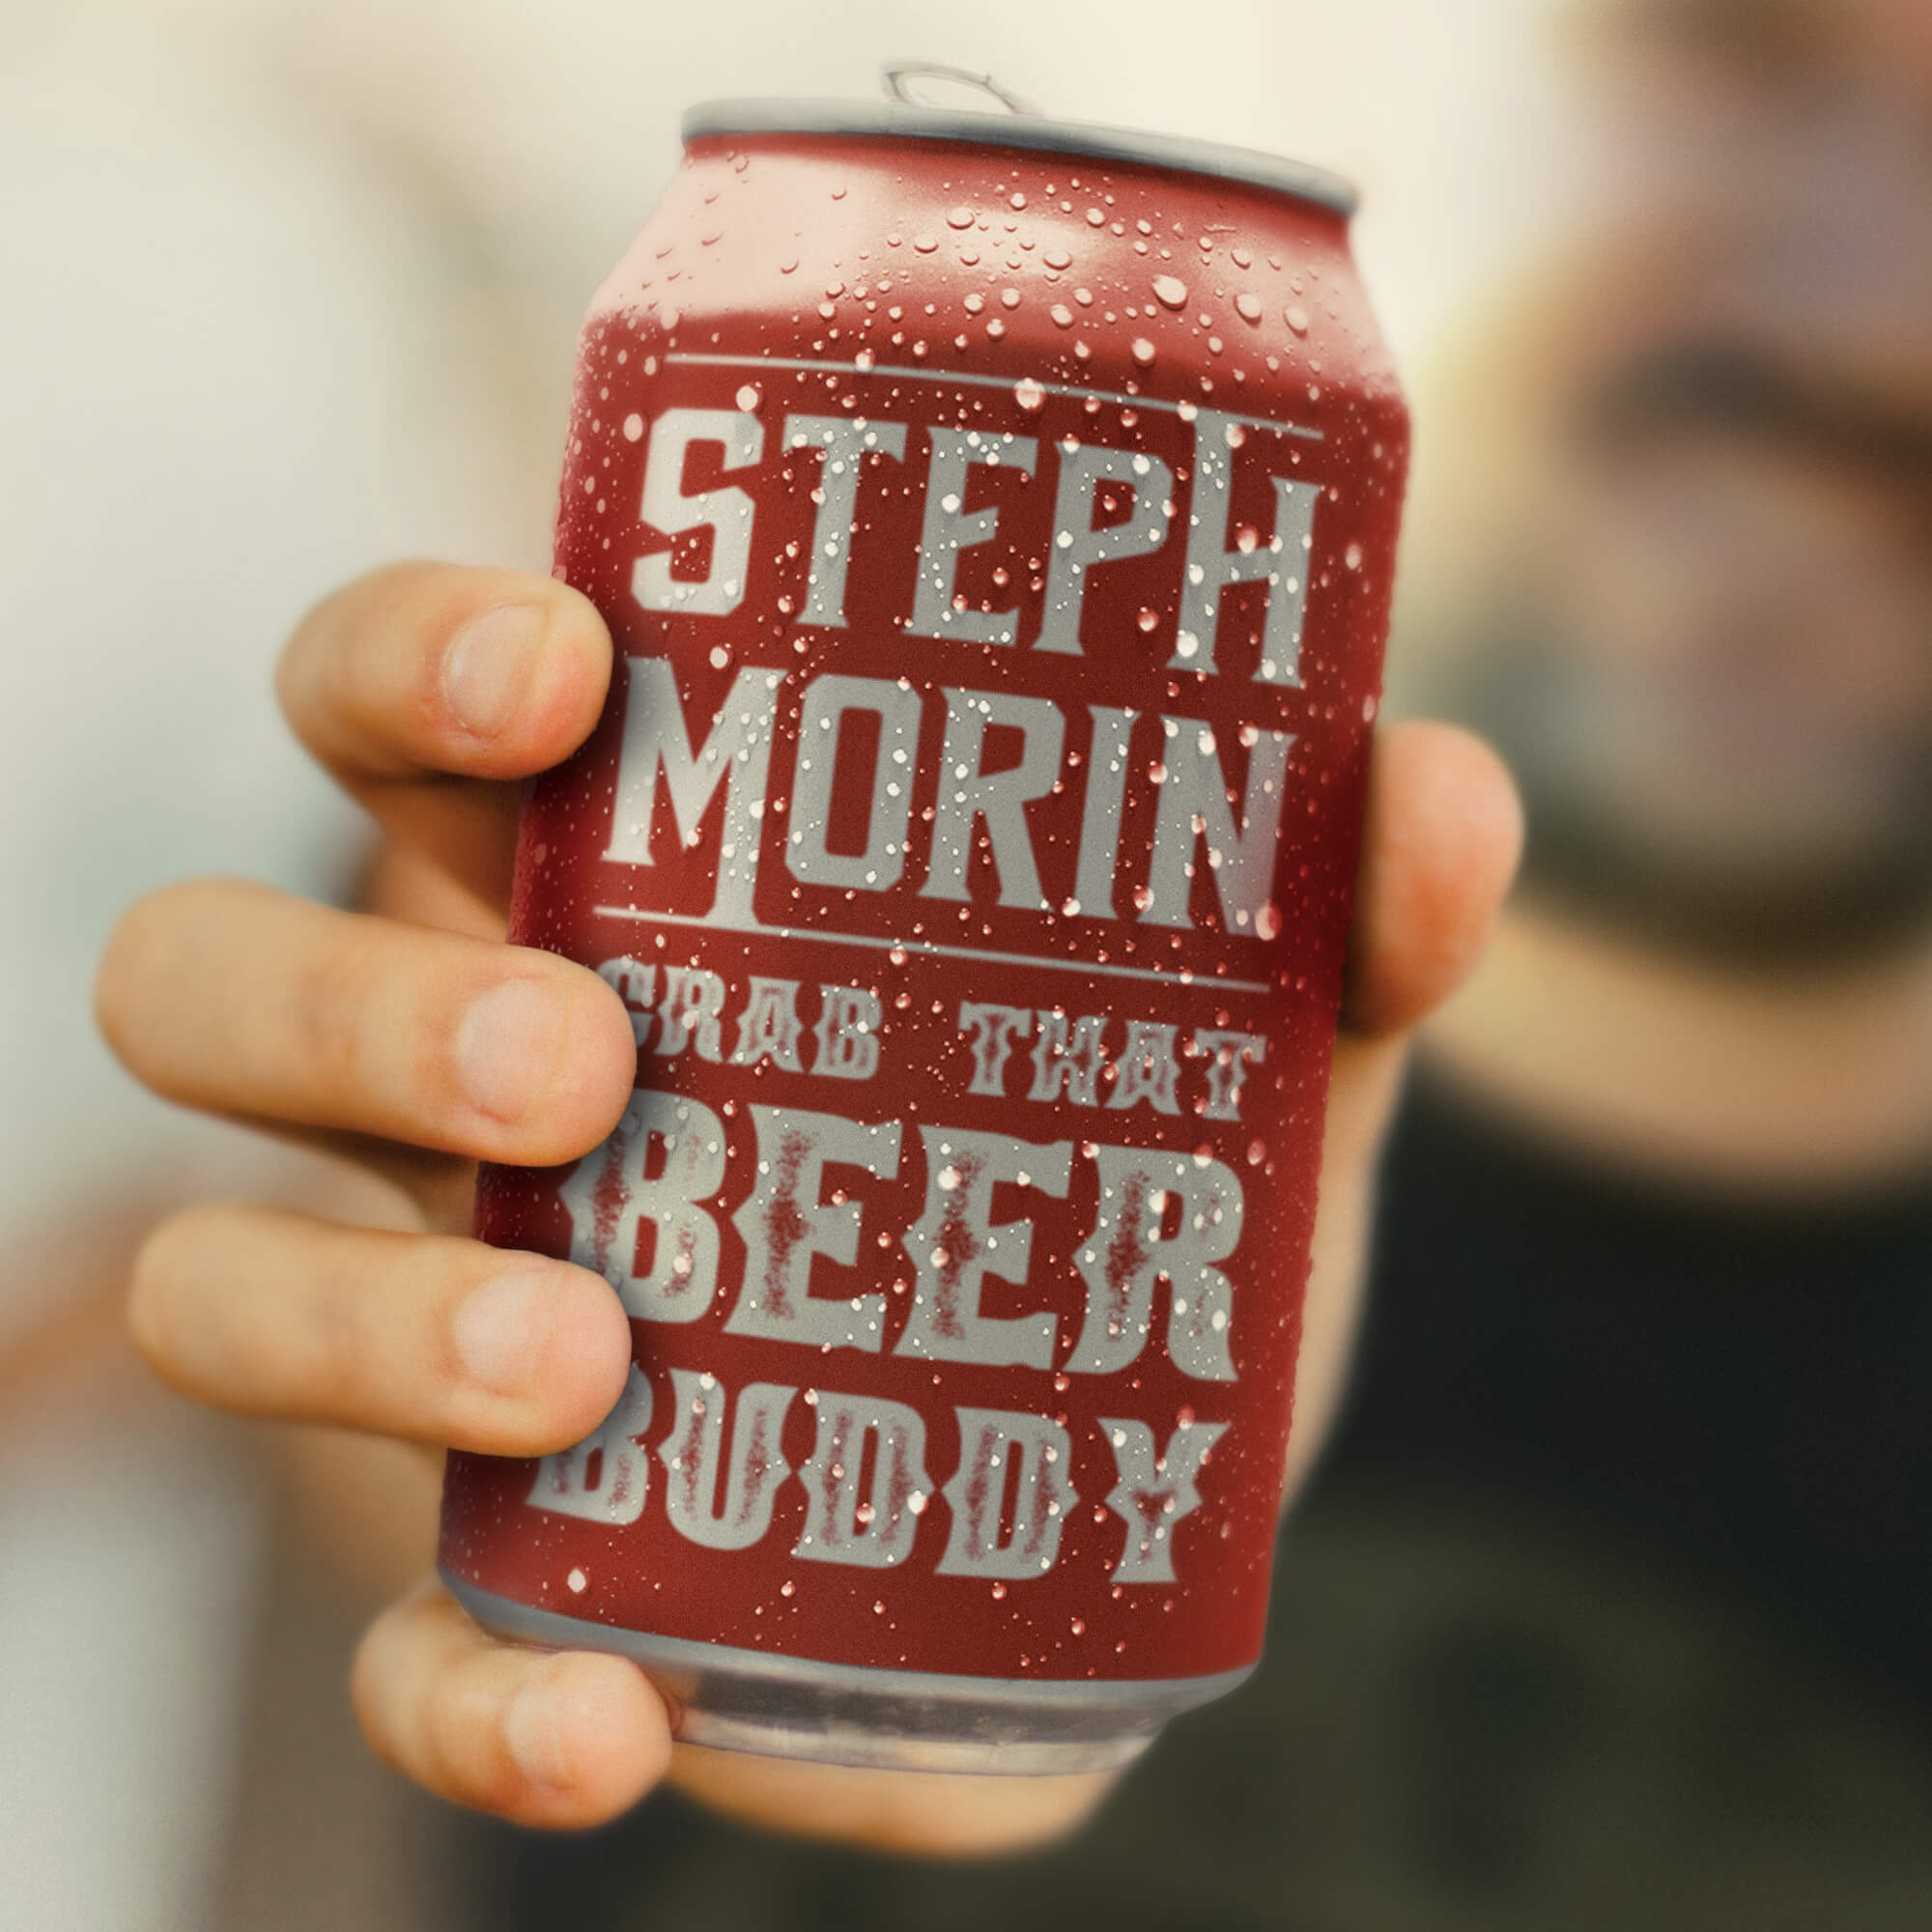 Steph Morin Grab That Beer Buddy single cover art